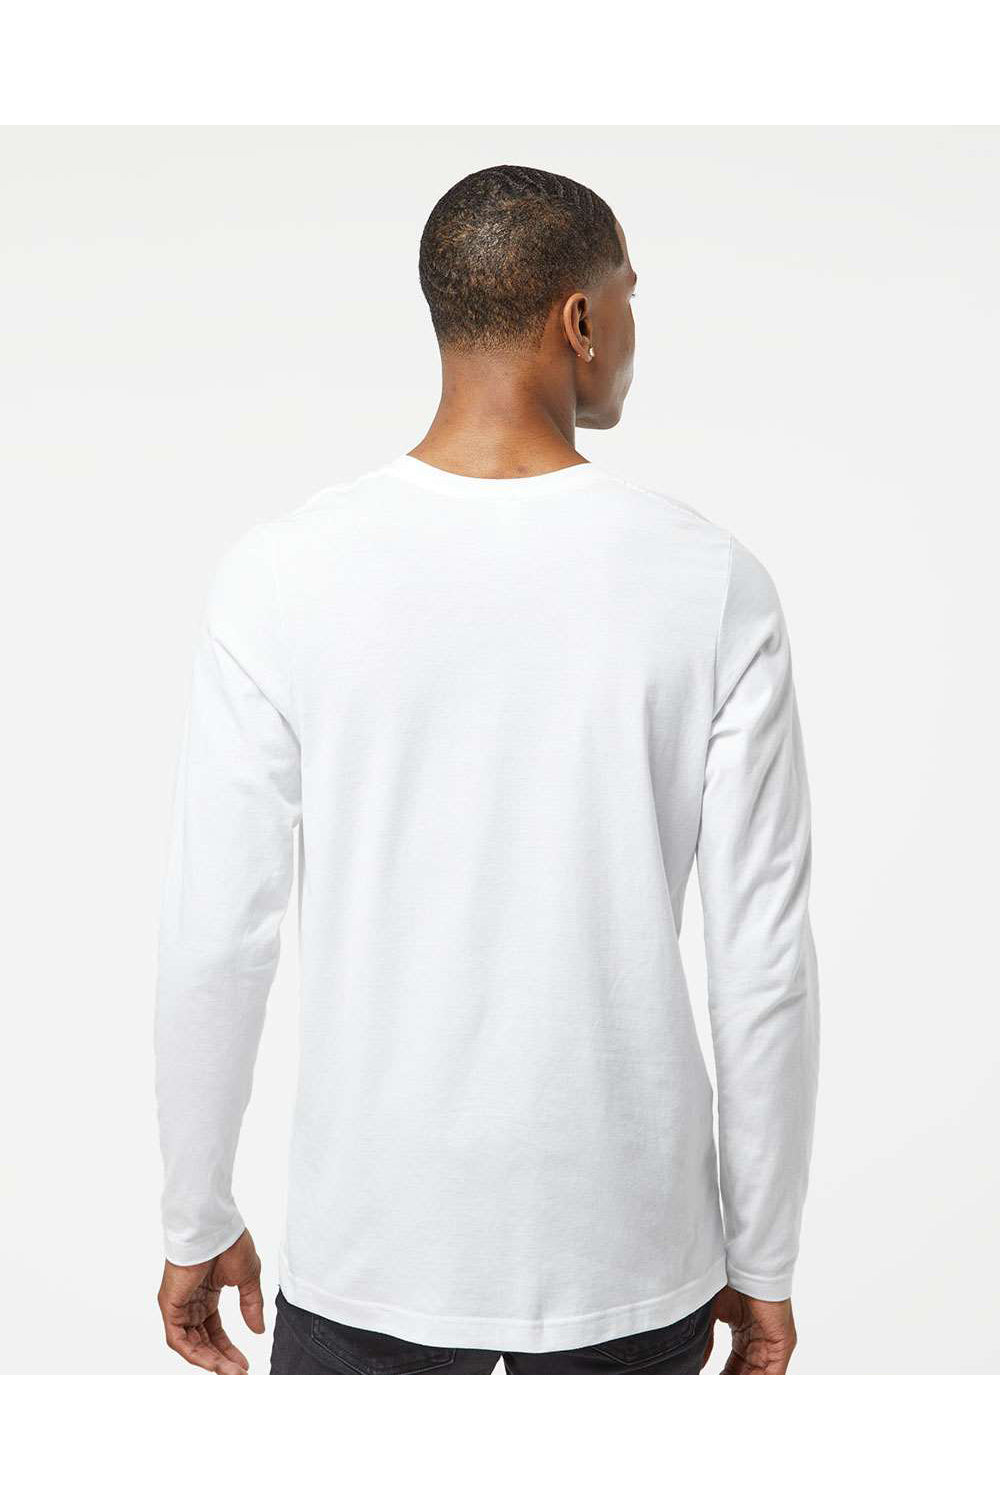 Tultex 591 Mens Premium Long Sleeve Crewneck T-Shirt White Model Back